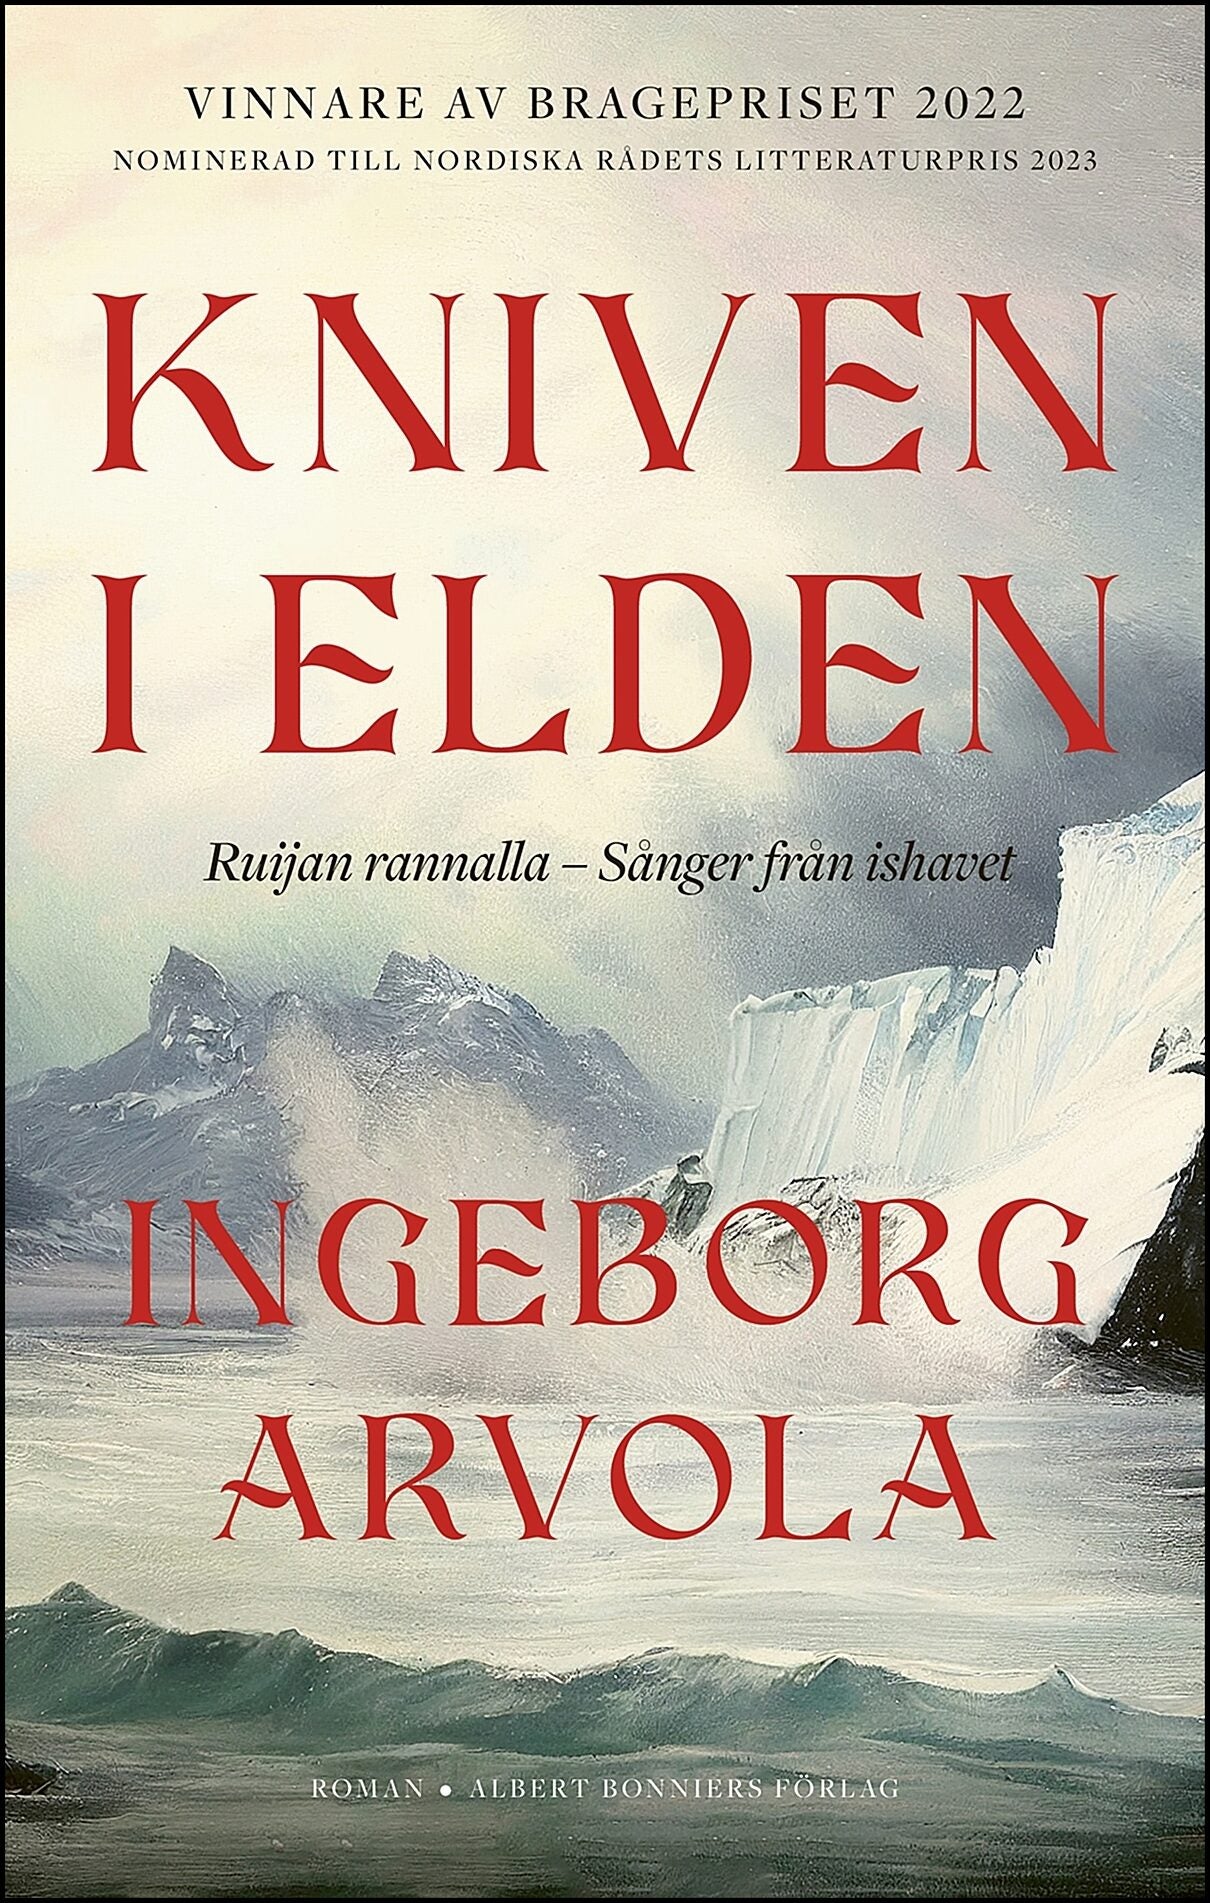 Arvola, Ingeborg | Kniven i elden